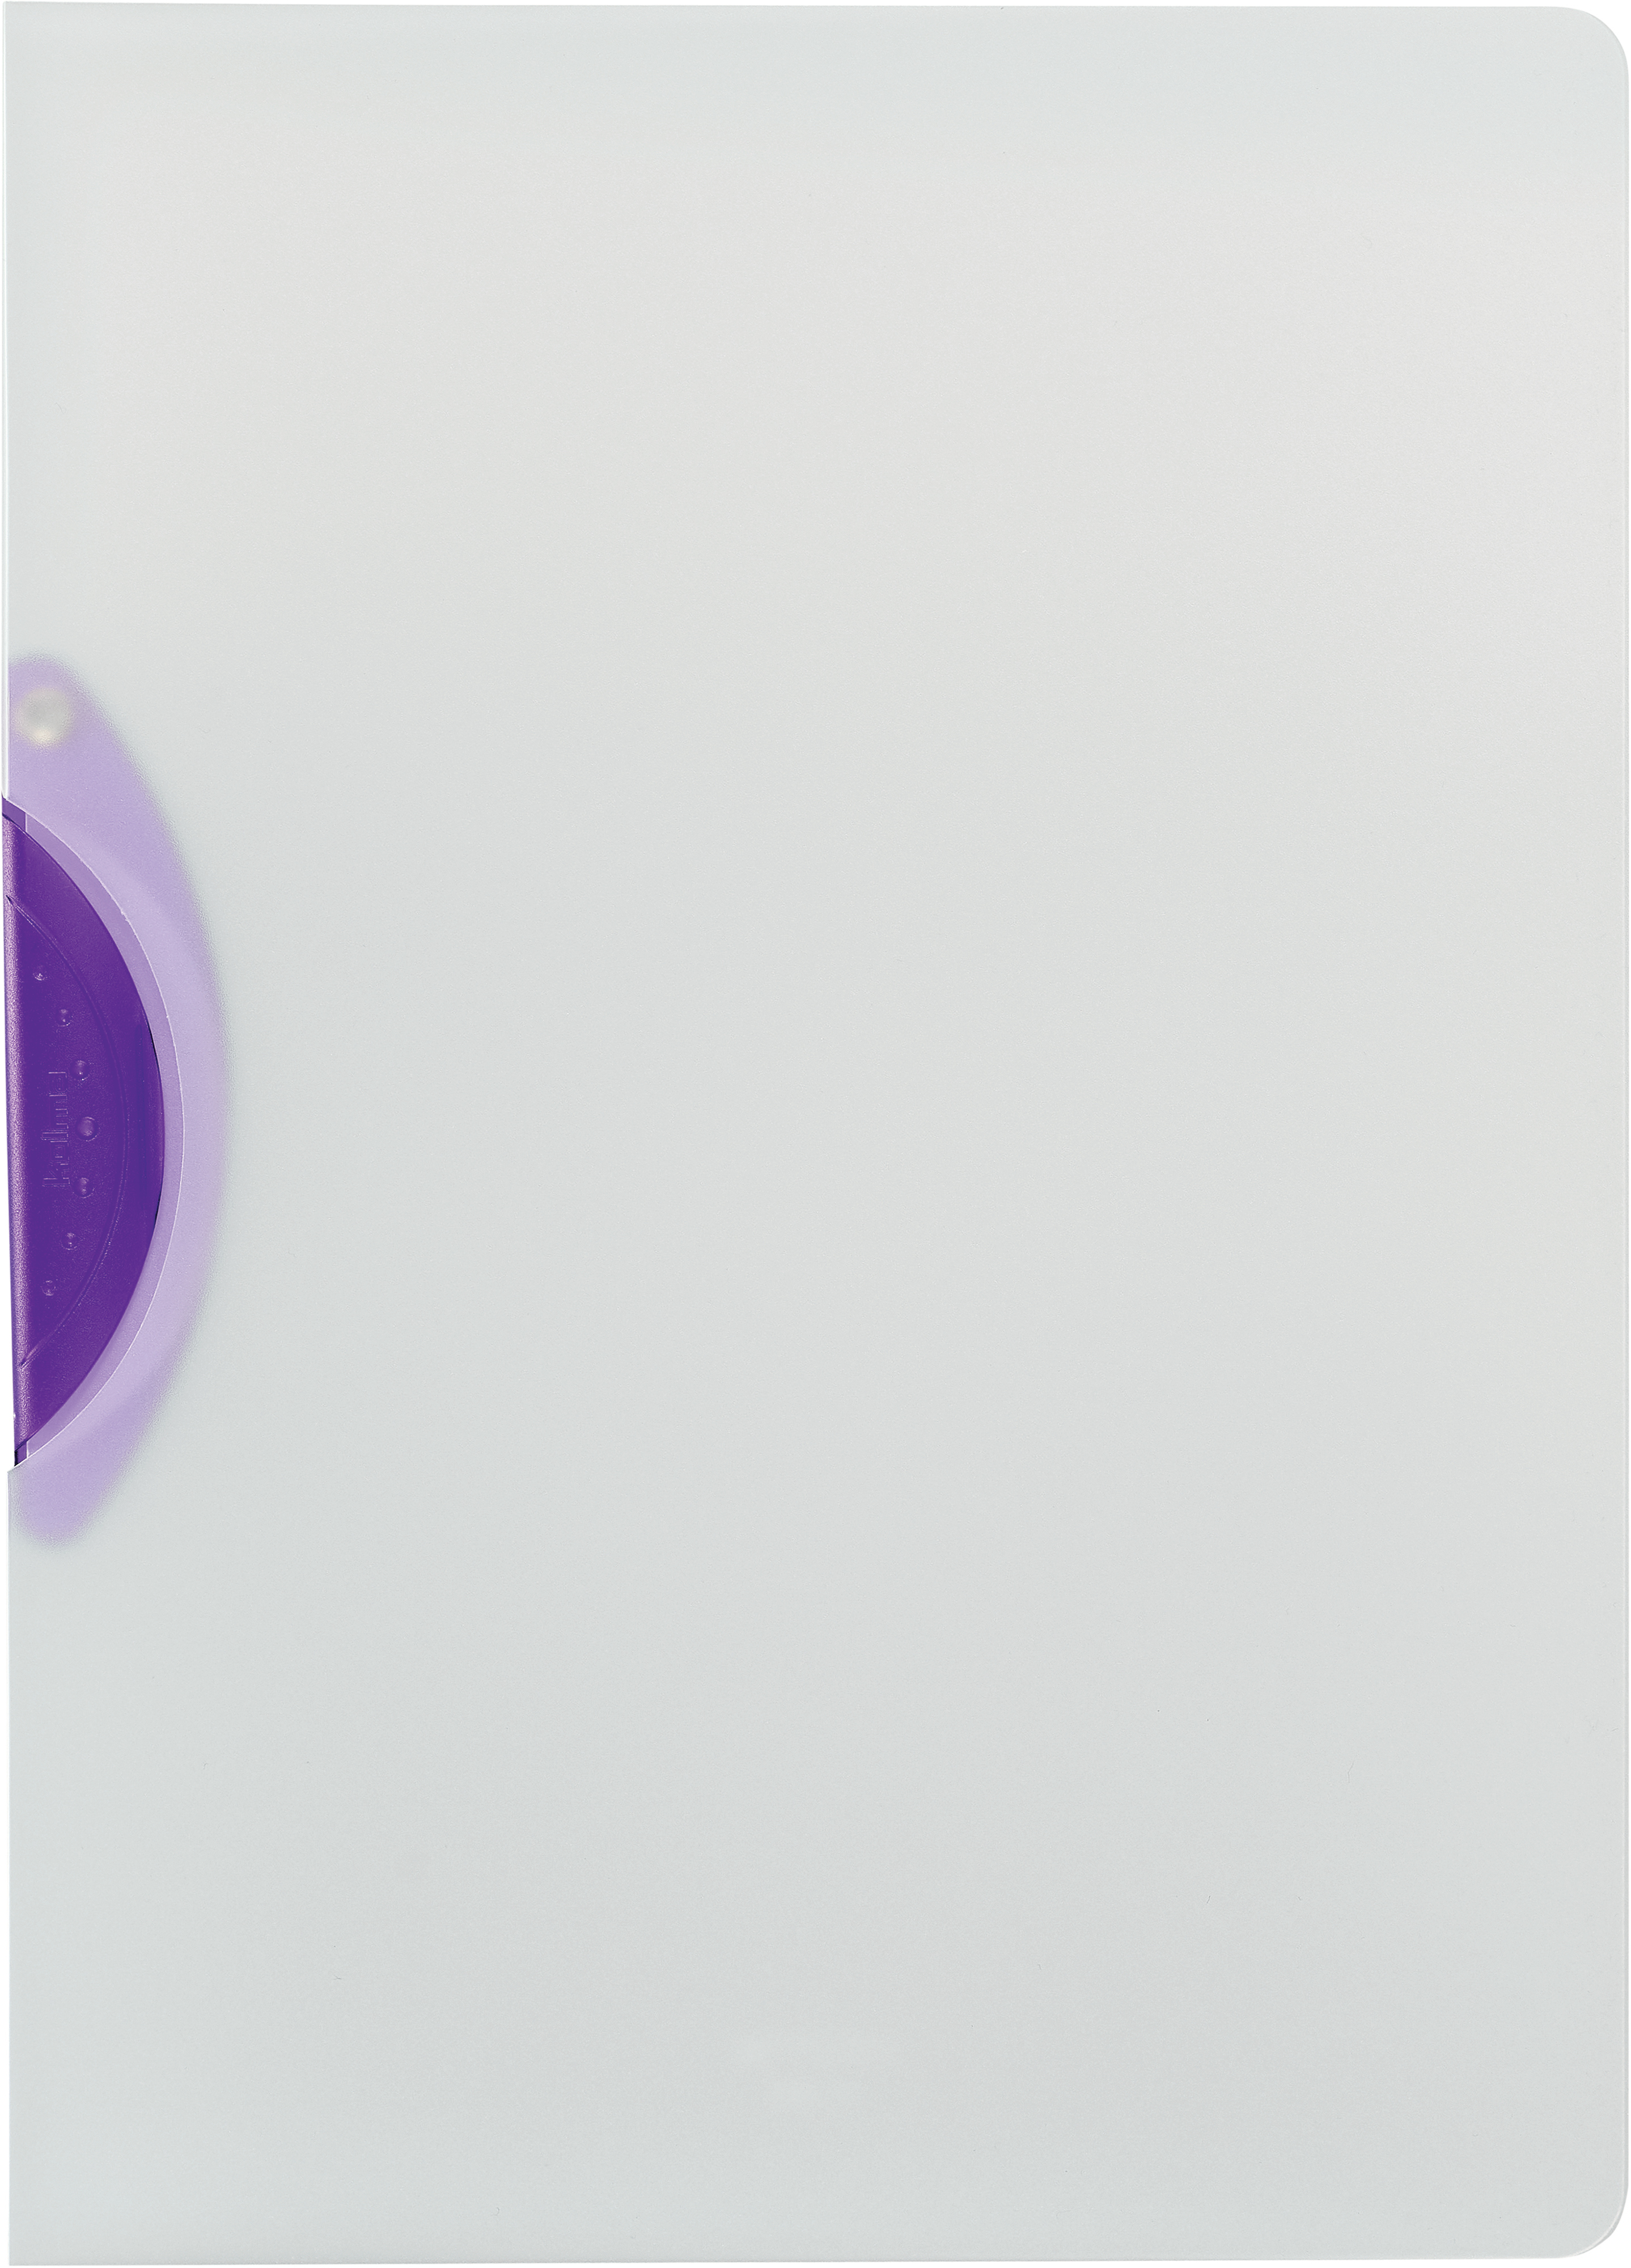 KOLMA Dossier à pince Easy Plus A4 11.012.13 violet